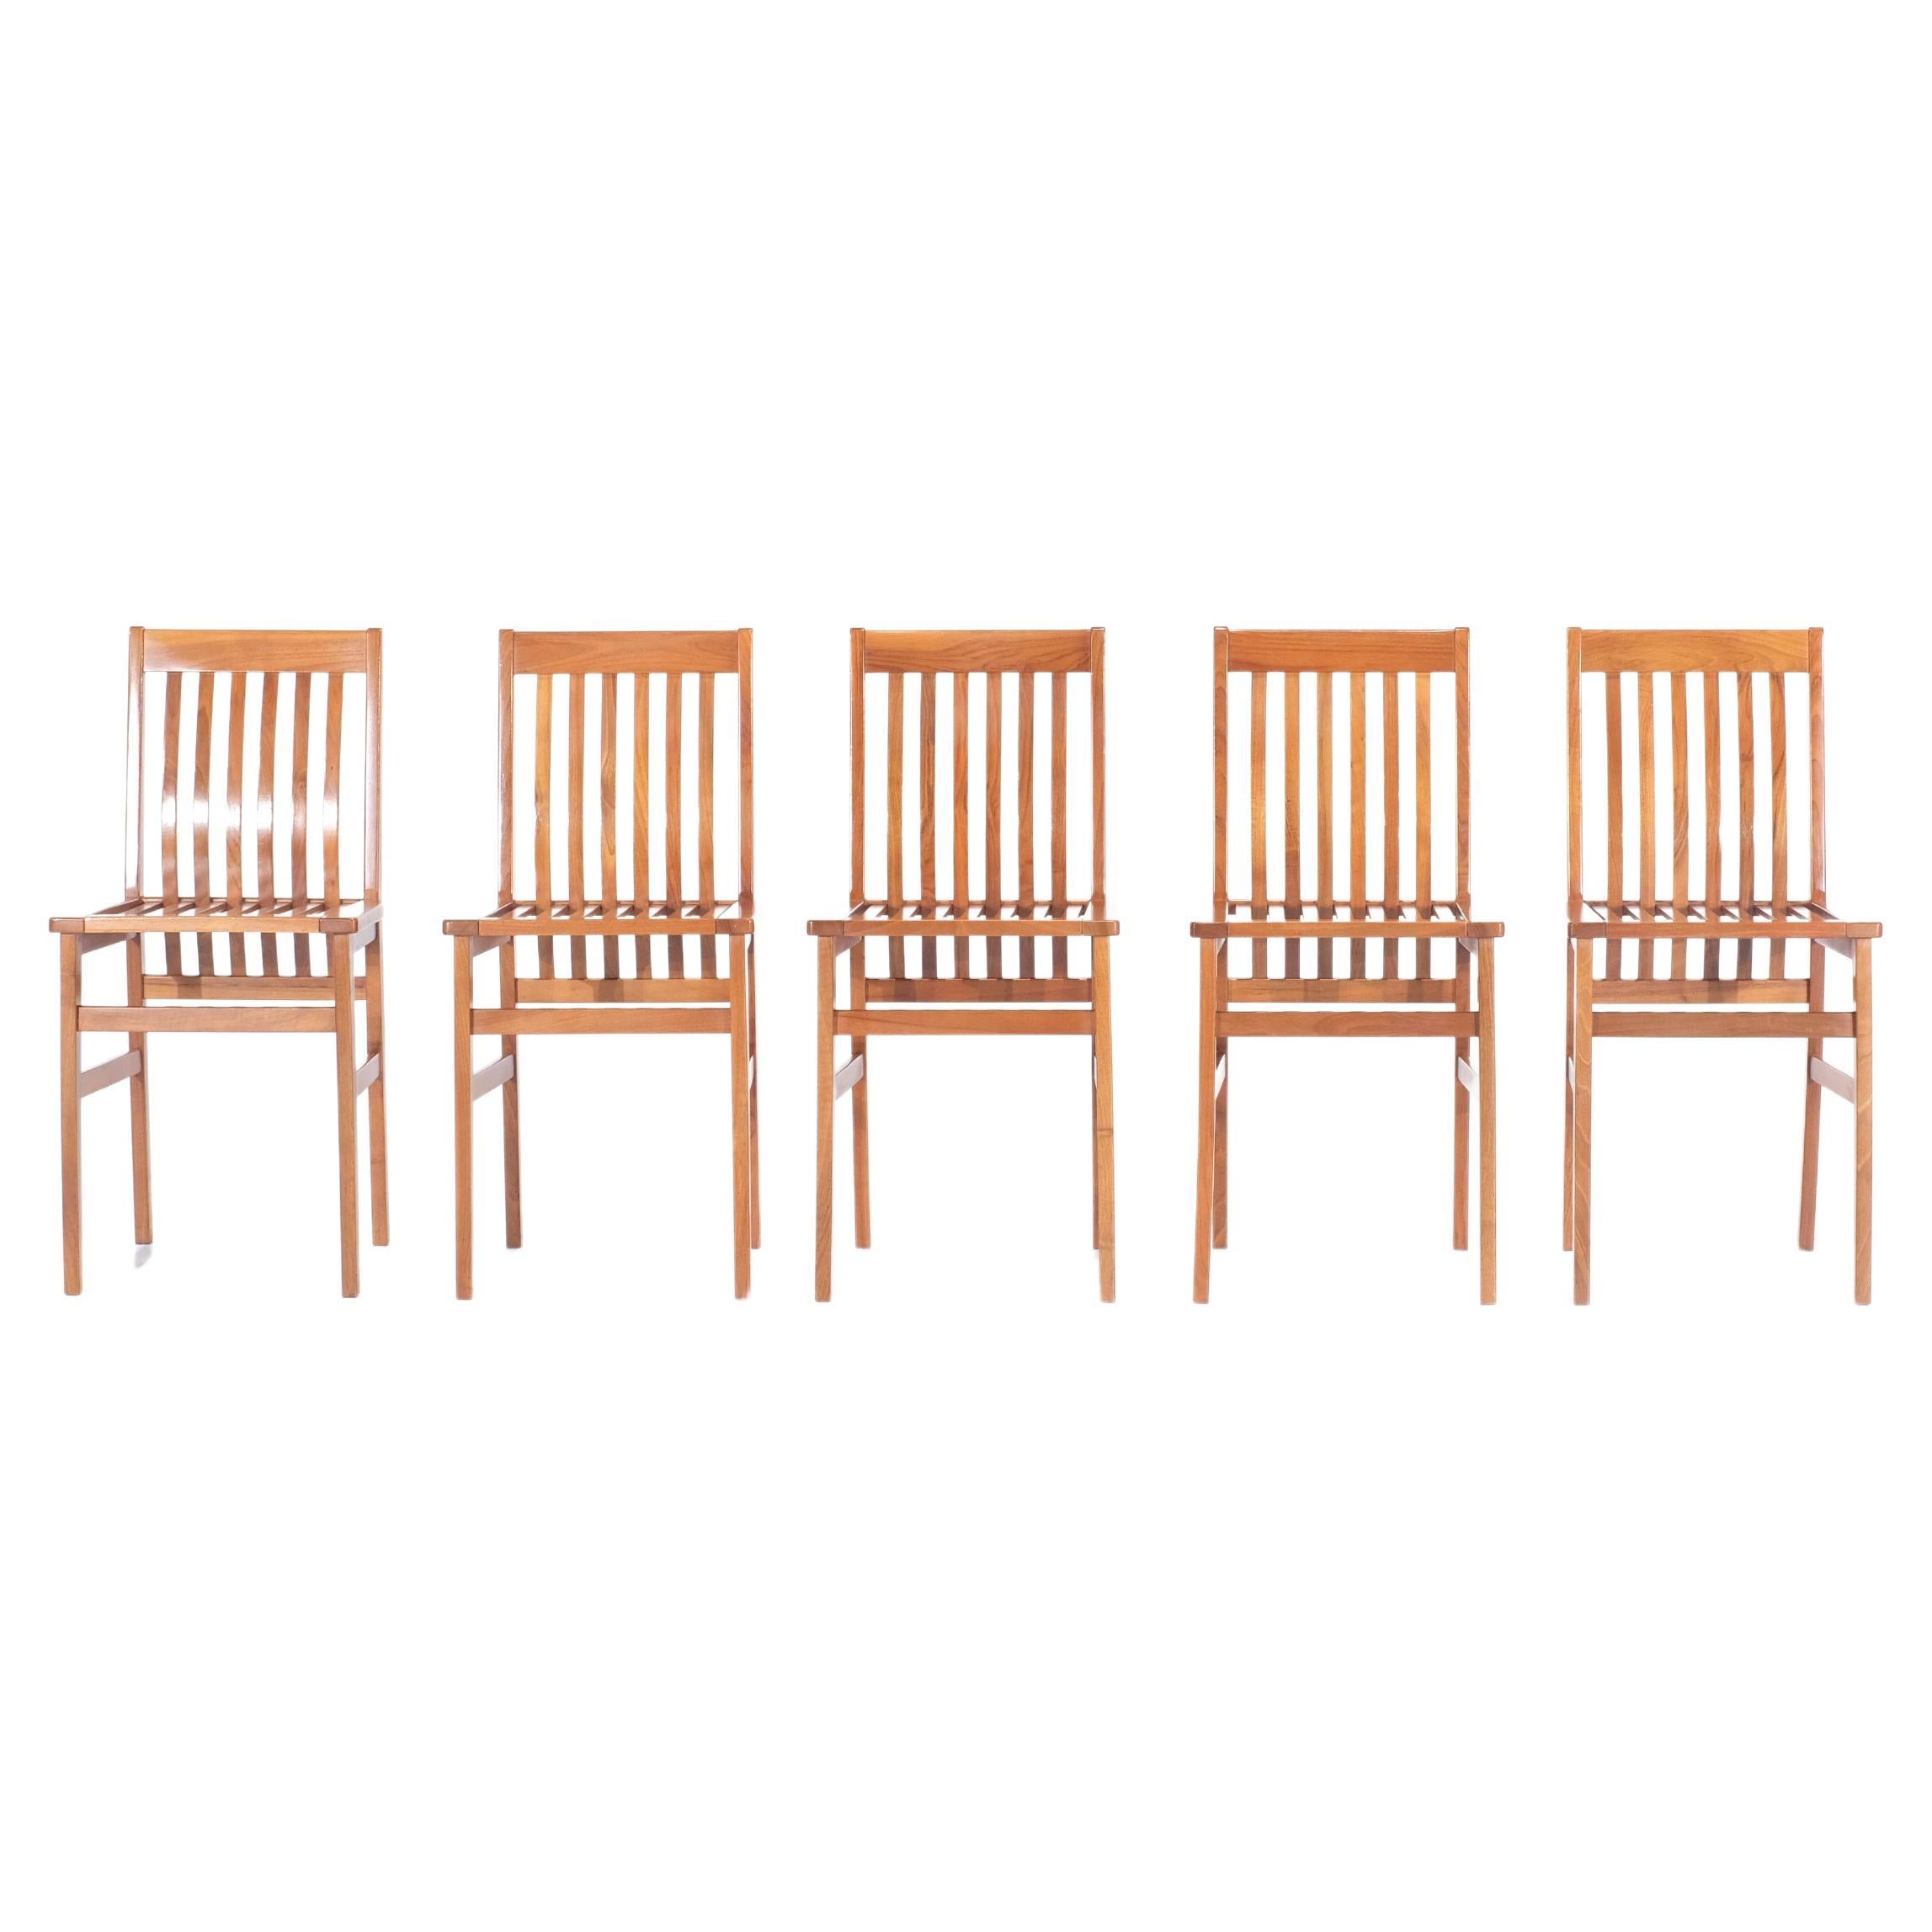 Milano chairs by Aldo Rossi for Molteni - 1980s For Sale